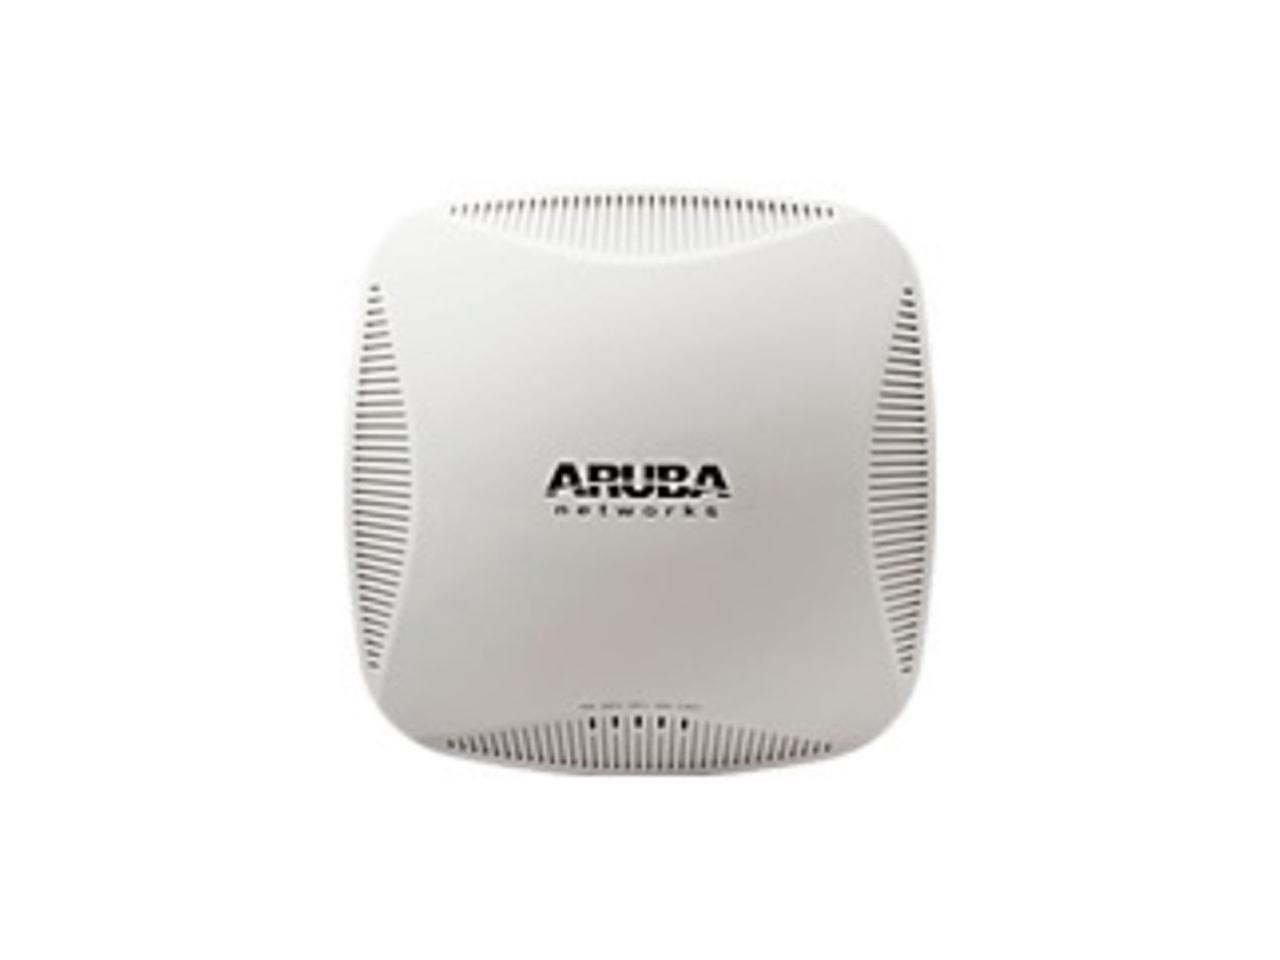 Aruba 220 Instant Wireless Access Point - IAP-225-US 359.99